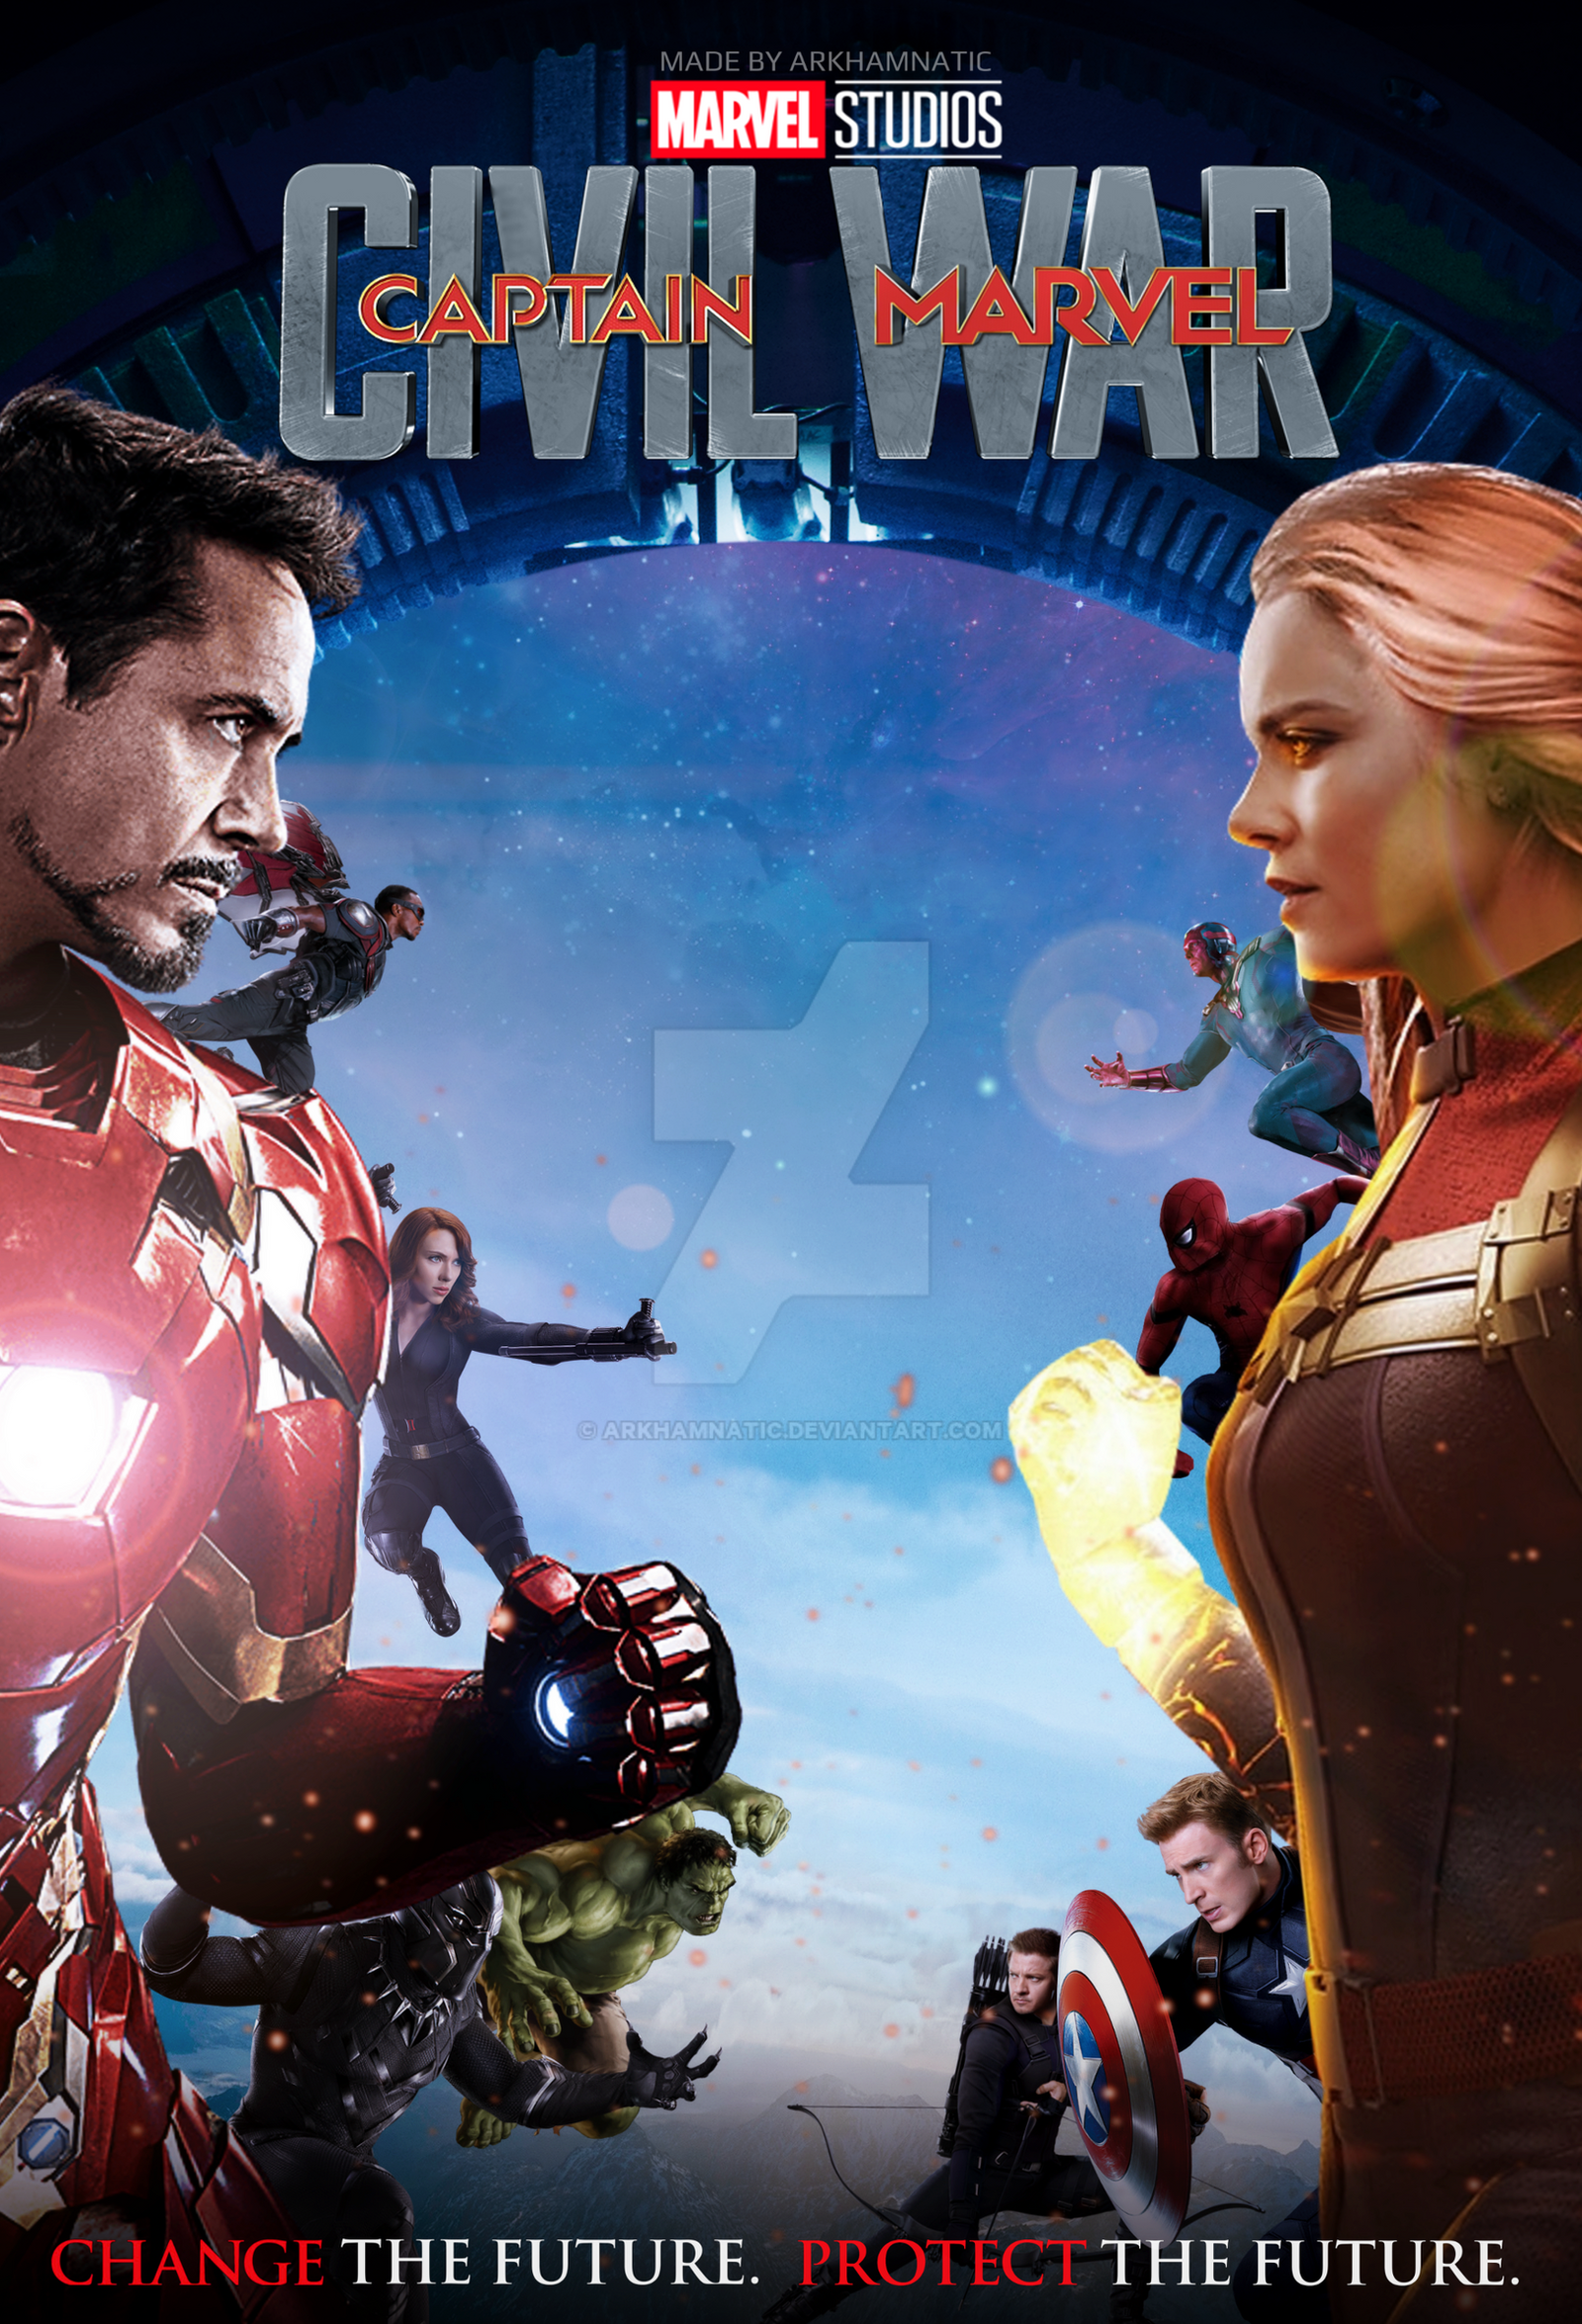 Captain Marvel Civil War movie poster by ArkhamNatic on